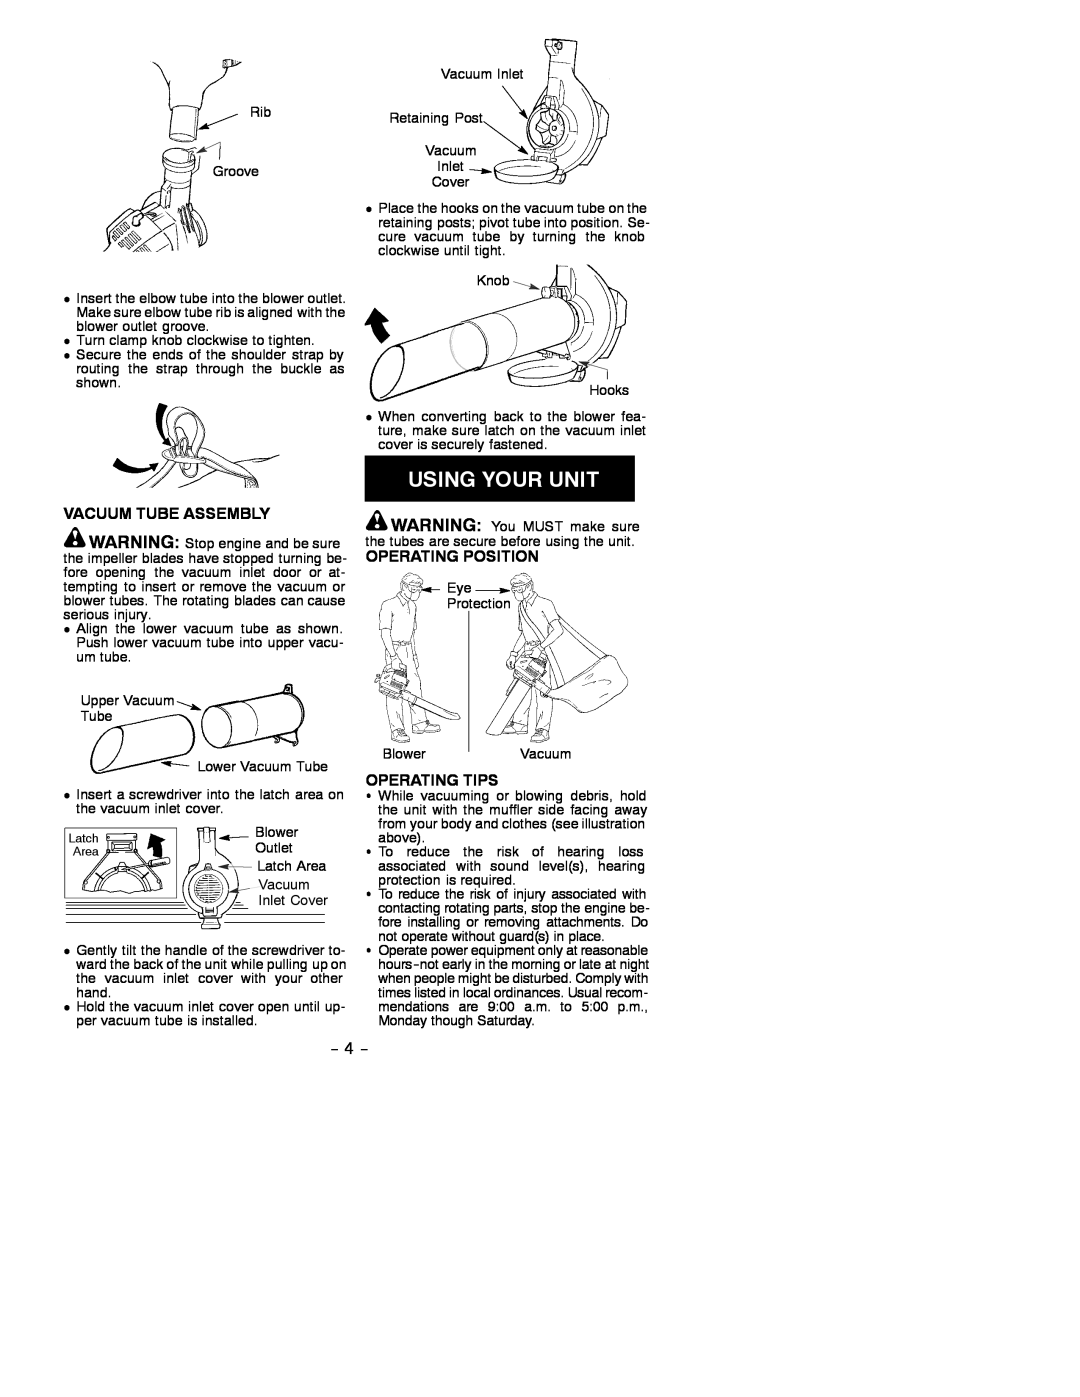 Poulan 530088741 instruction manual Vacuum Tube Assembly, Operating Position, Operating Tips 